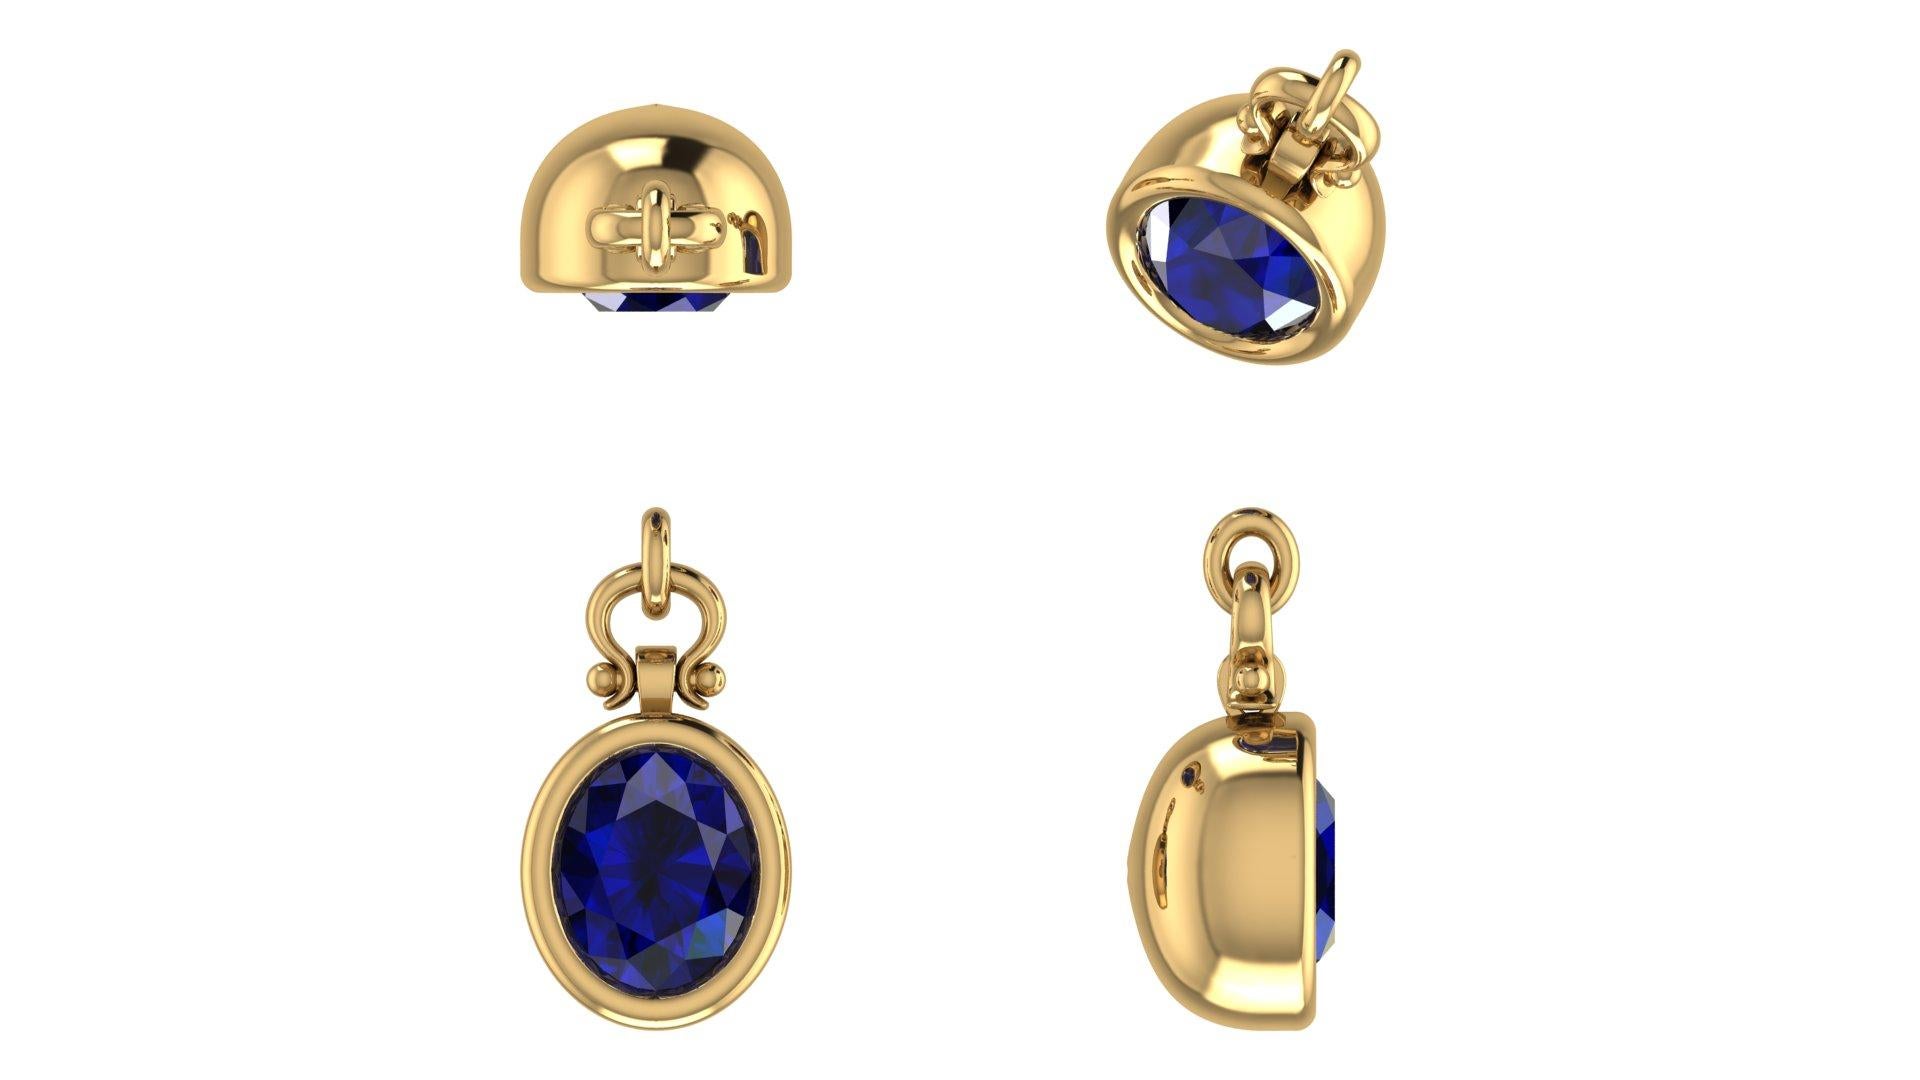 Contemporain Berberyn Collier pendentif en or 18 carats avec saphir bleu taille ovale certifié 3,01 carats en vente